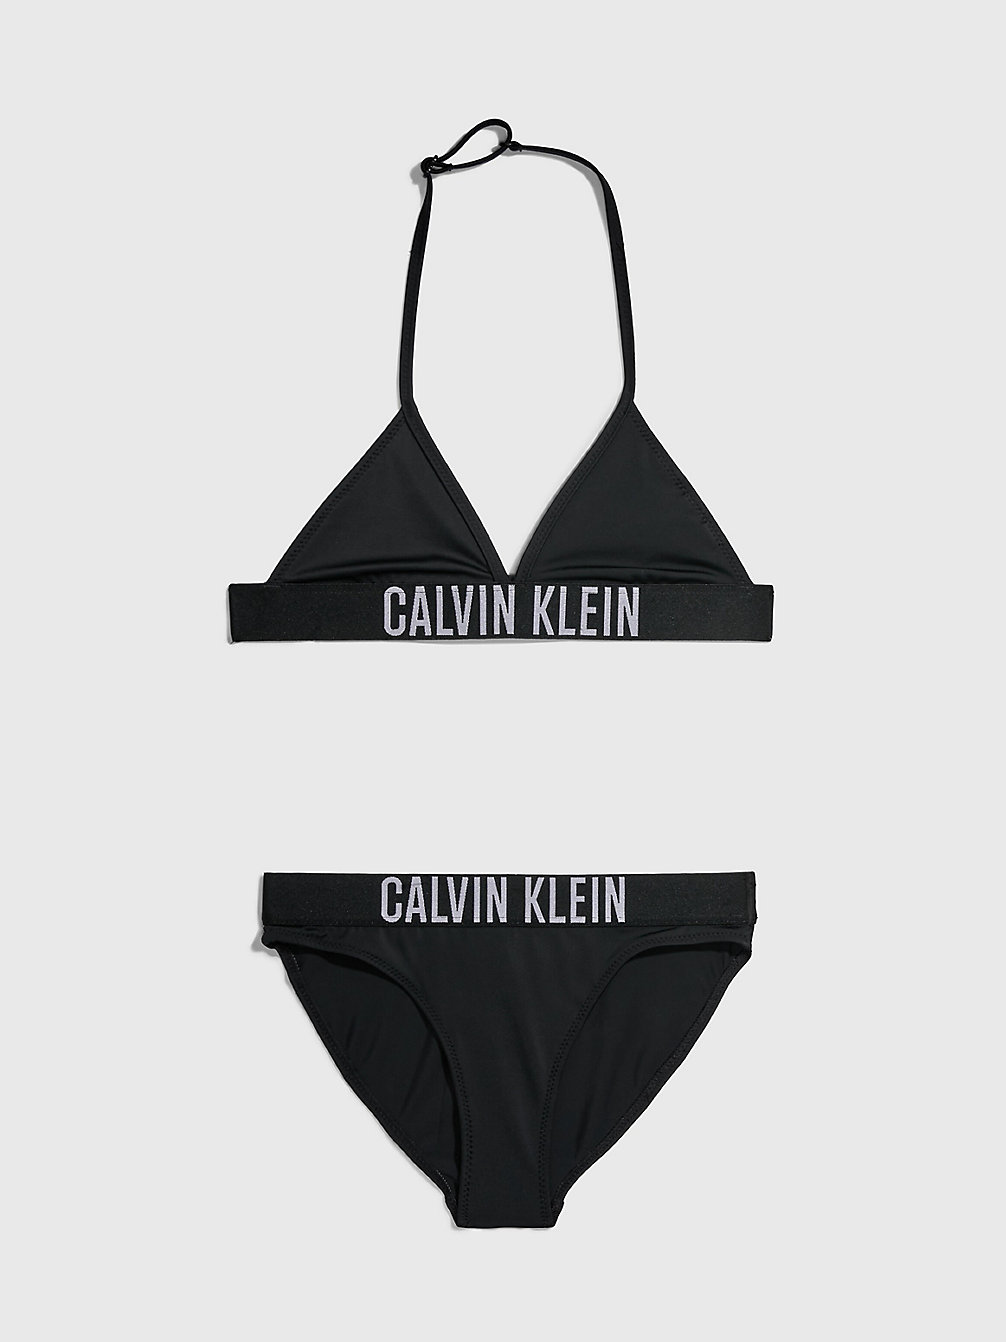 PVH BLACK Ensemble Bikini Triangle Pour Fille - Intense Power undefined girls Calvin Klein